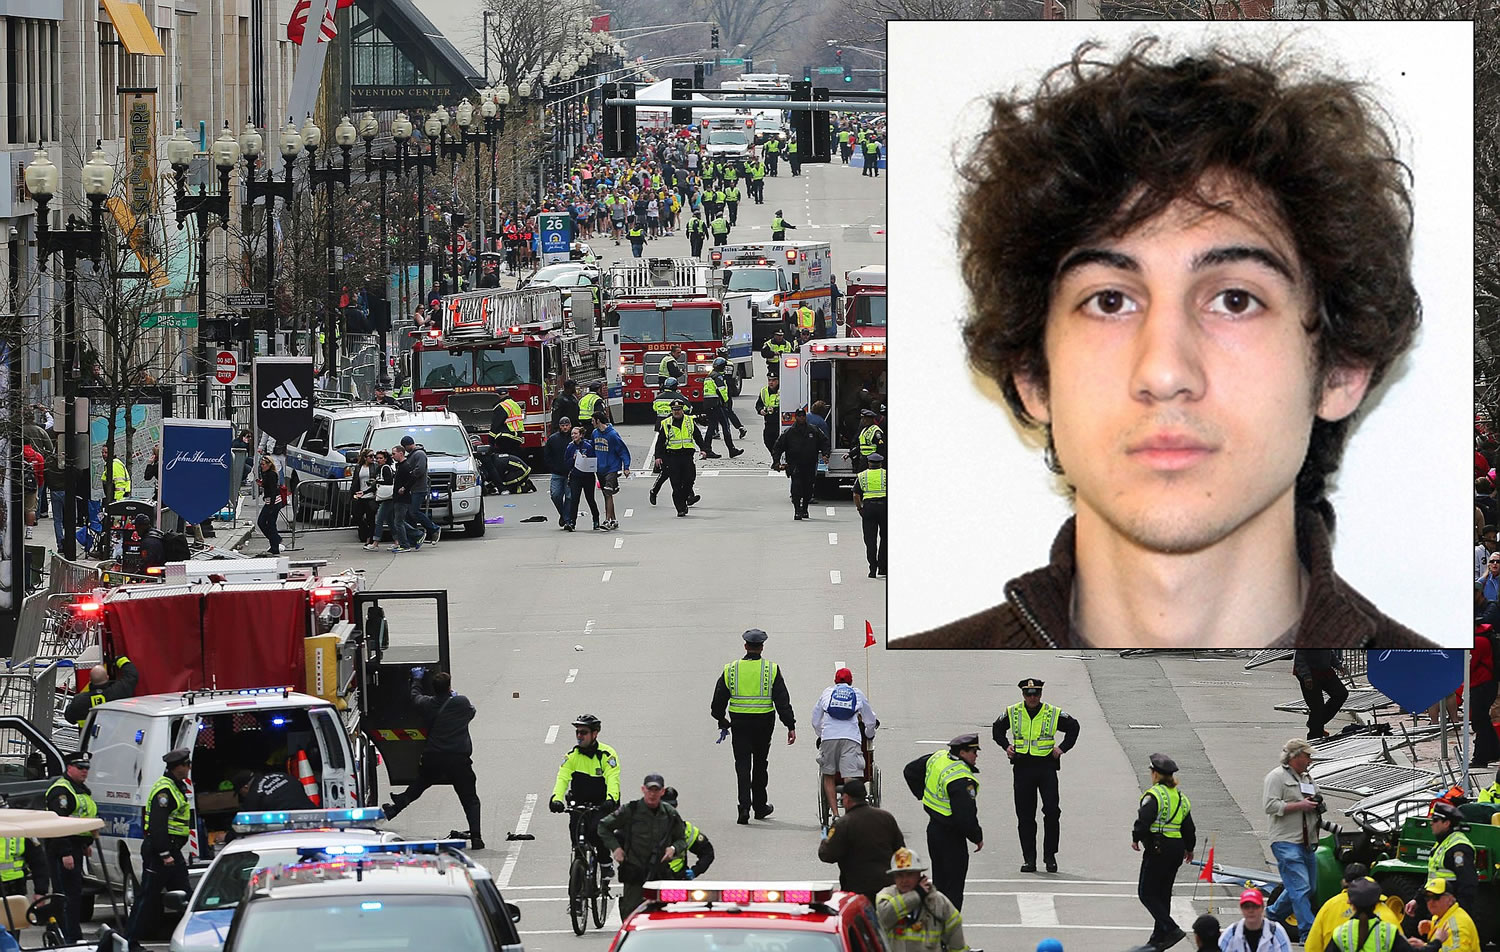 A jury has sentenced Boston Marathon bomber Dzhokhar Tsarnaev to death.